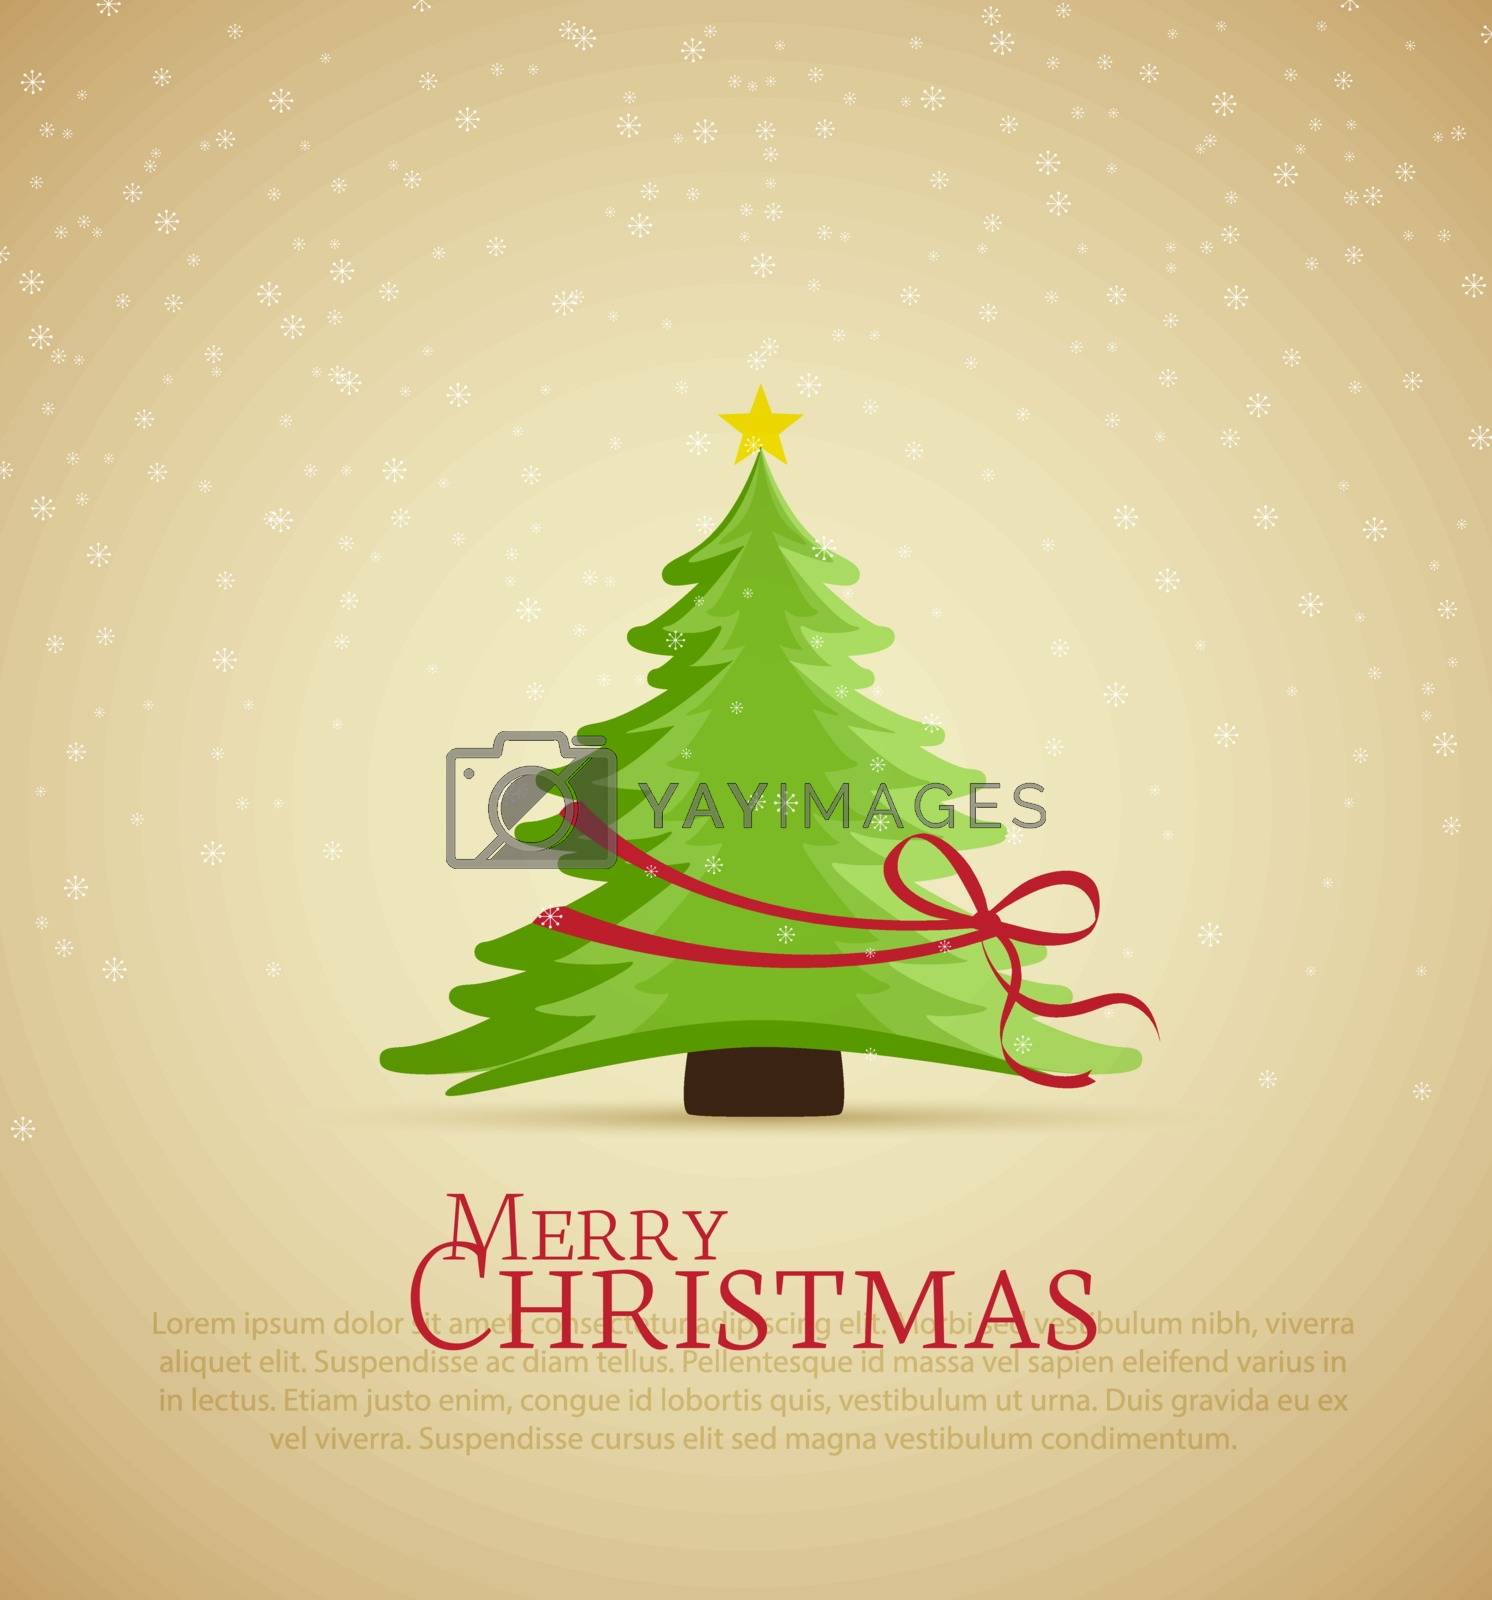 Royalty free image of Christmas tree by odina222